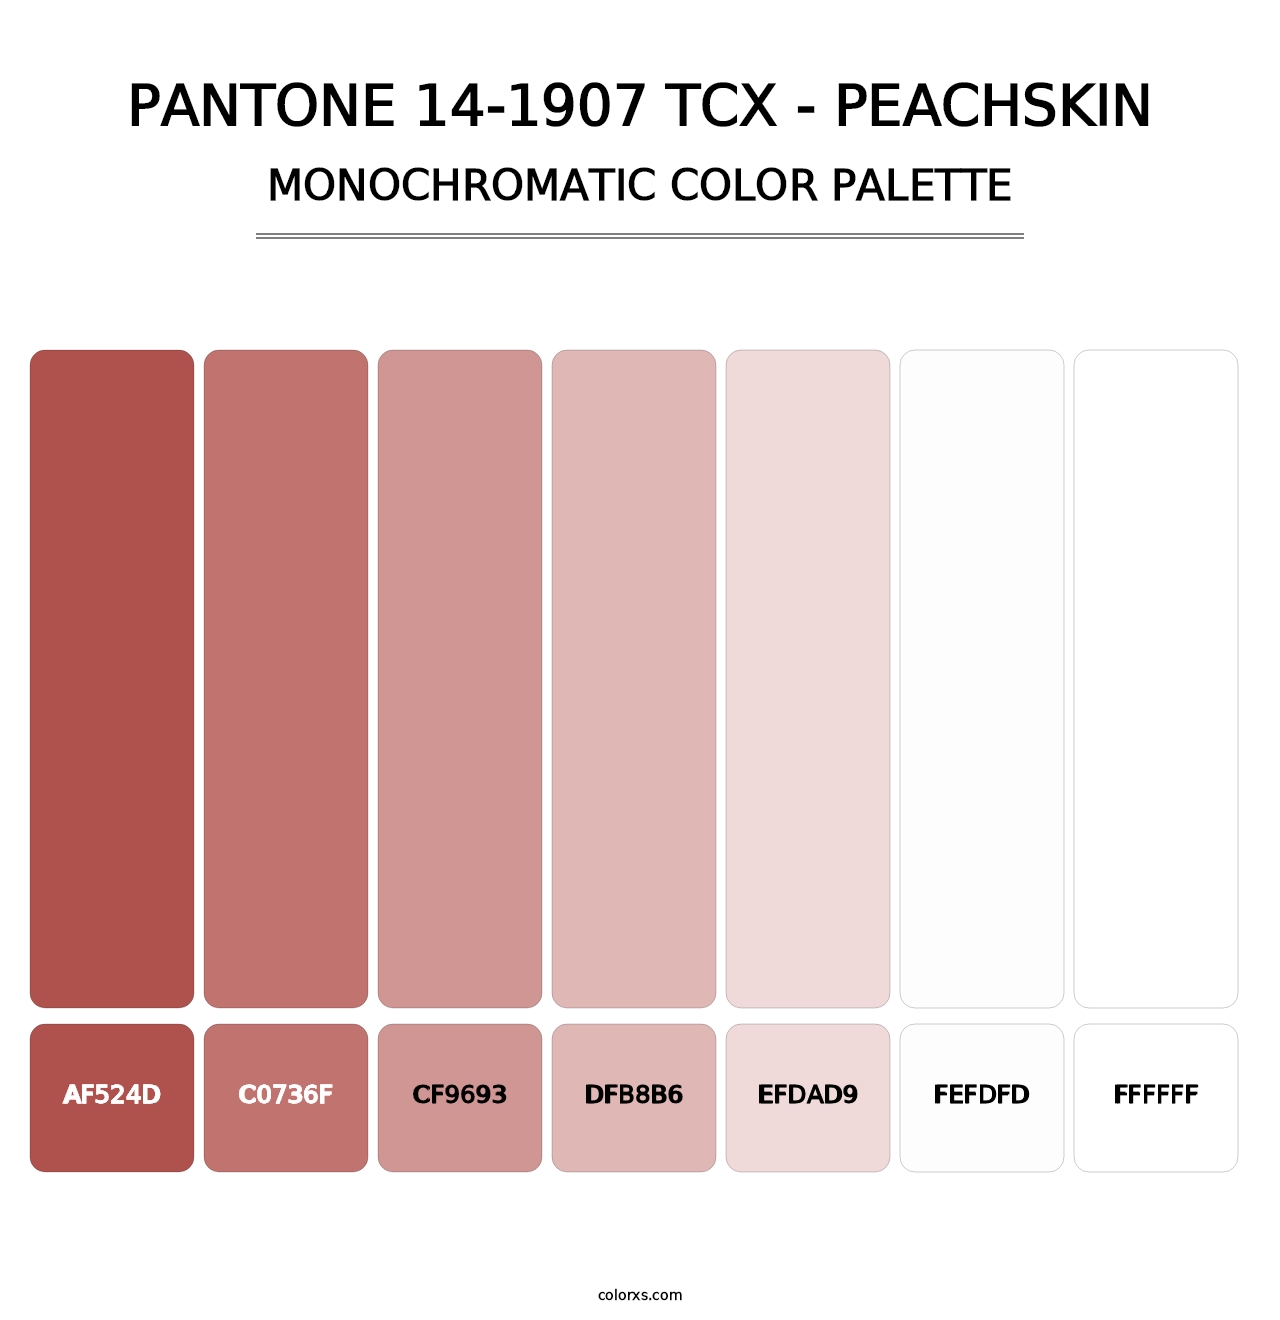 PANTONE 14-1907 TCX - Peachskin - Monochromatic Color Palette